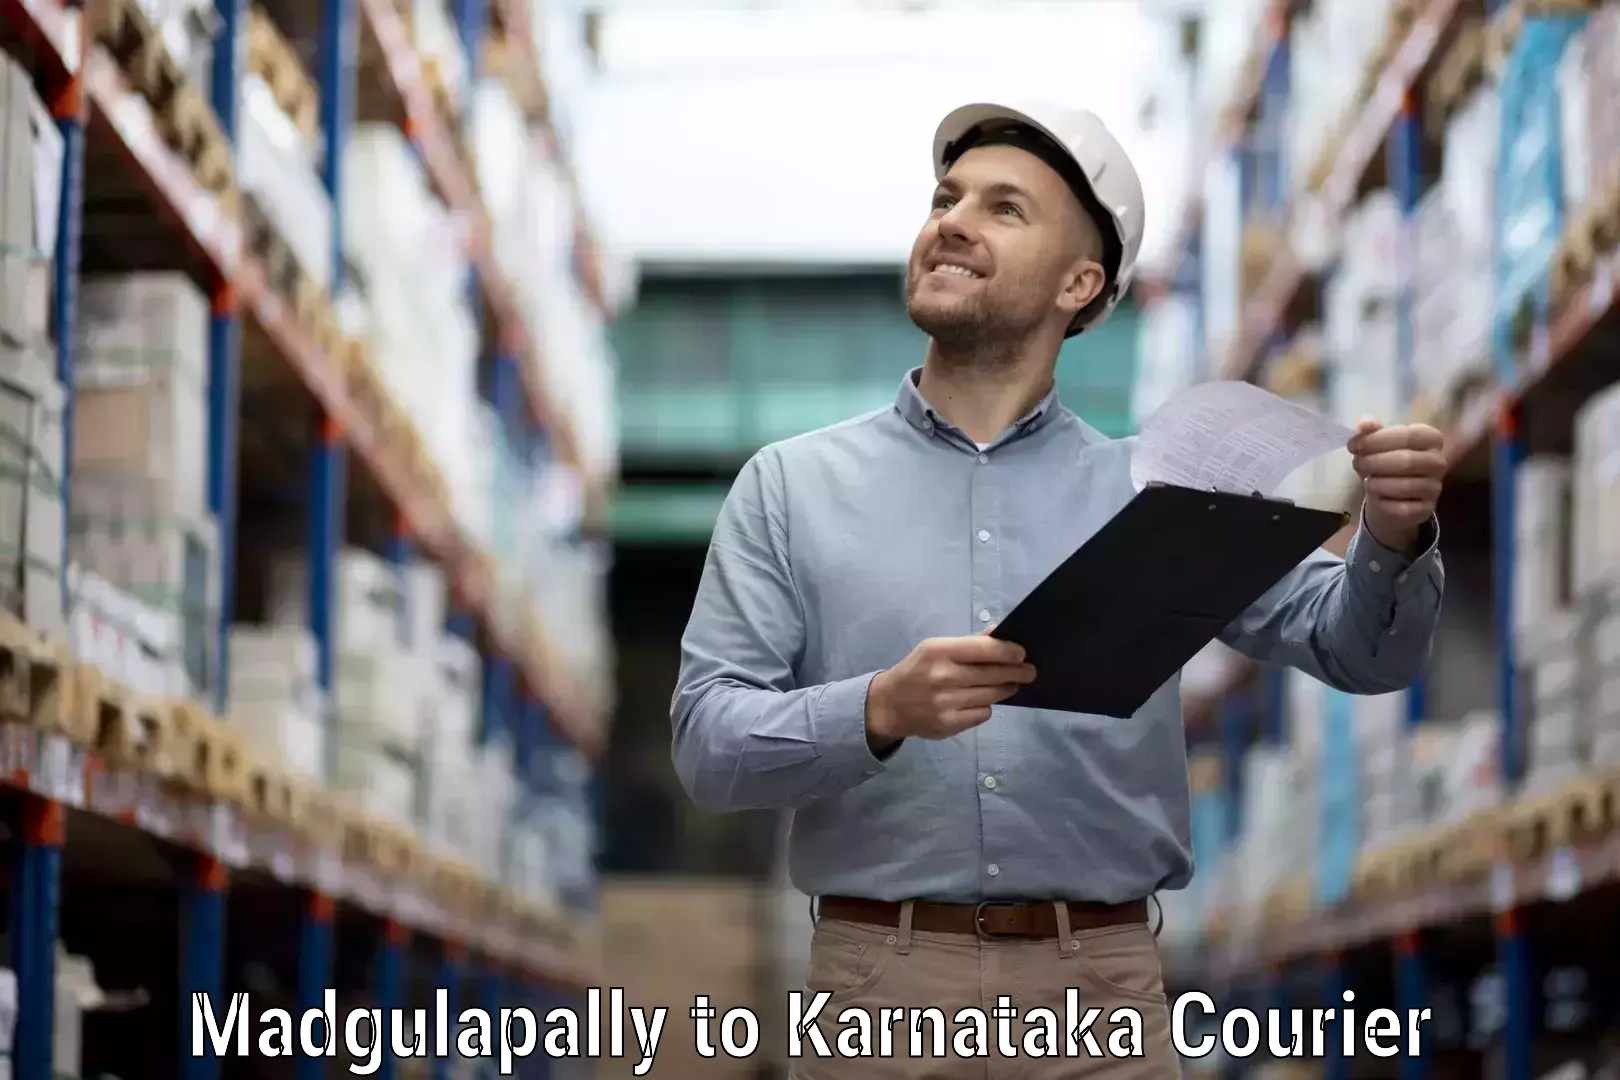 Enhanced shipping experience Madgulapally to Kanjarakatte